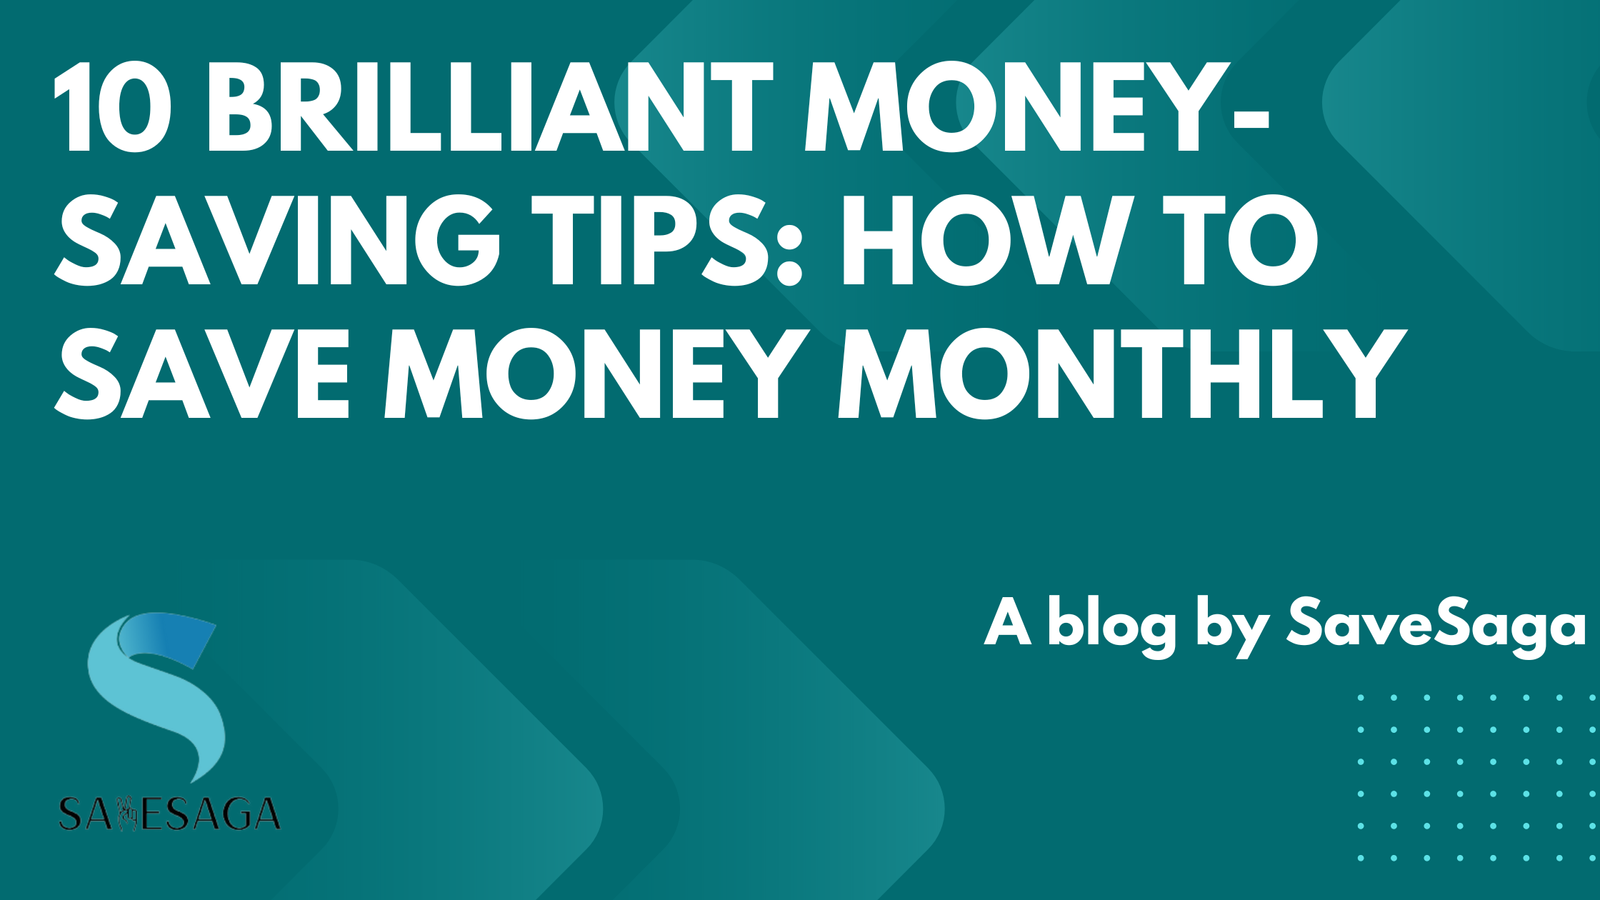 10 Brilliant Money-Saving Tips